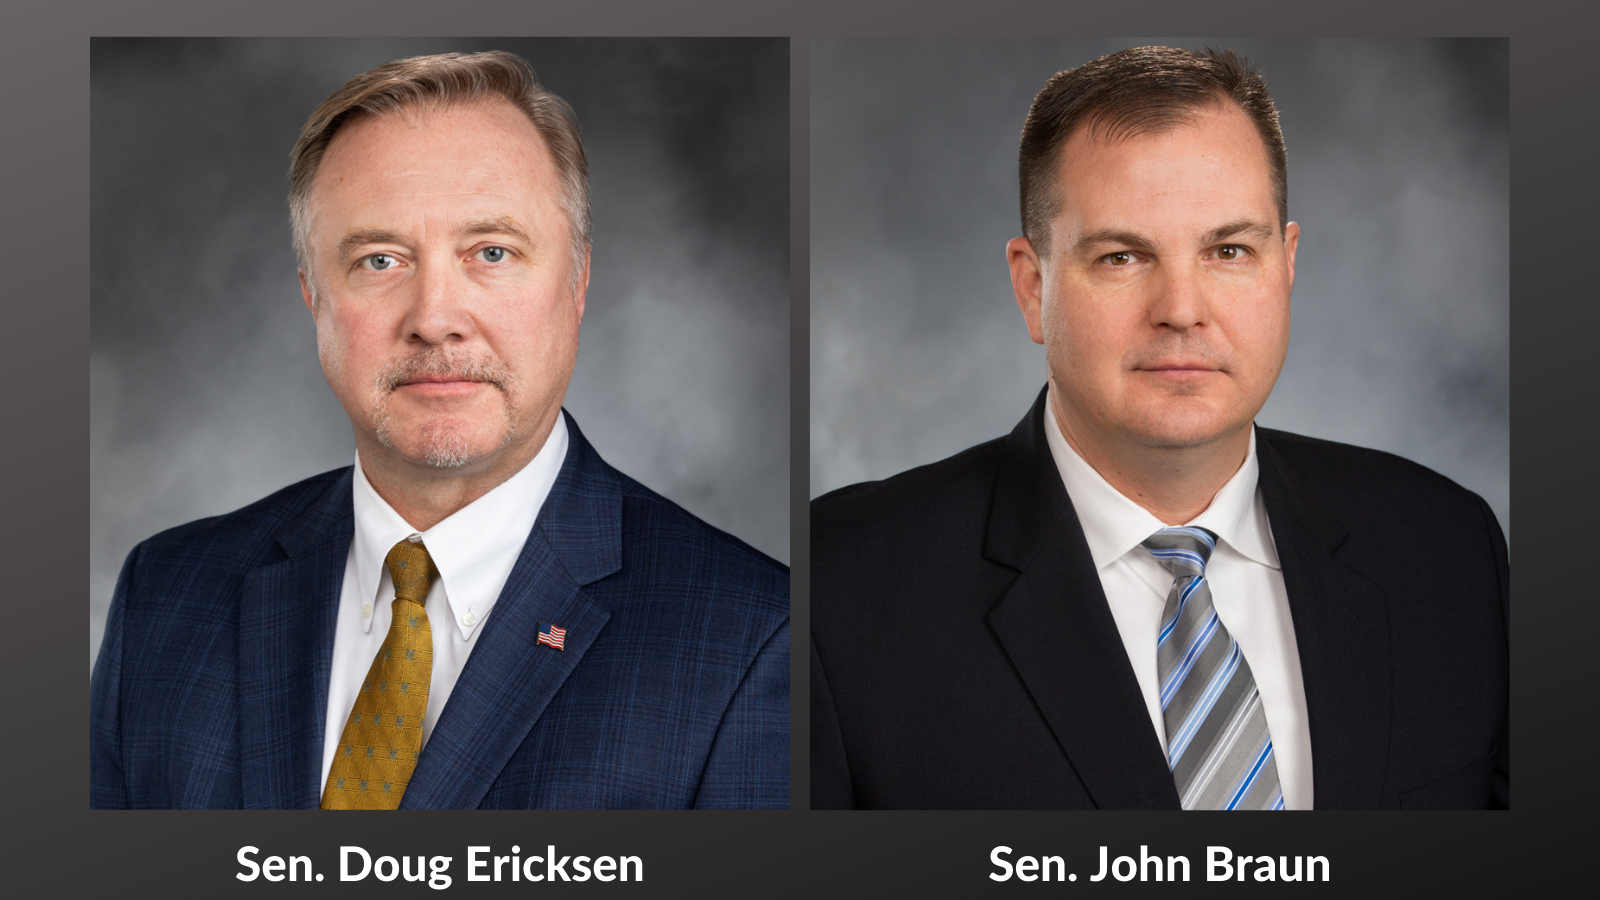 AUDIO: Senator Doug Ericksen will be greatly missed, says Braun